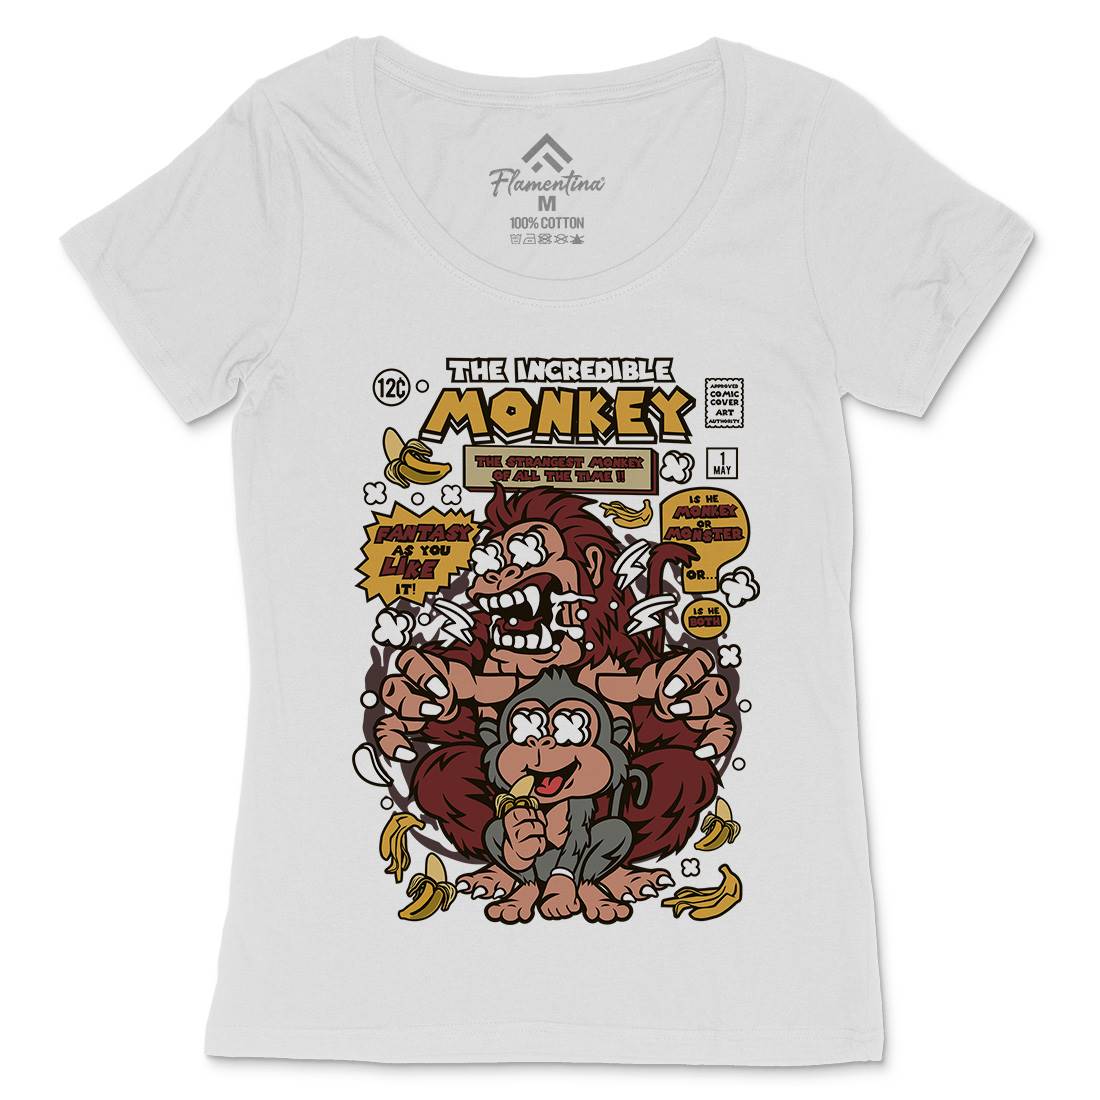 Incredible Monkey Womens Scoop Neck T-Shirt Animals C570